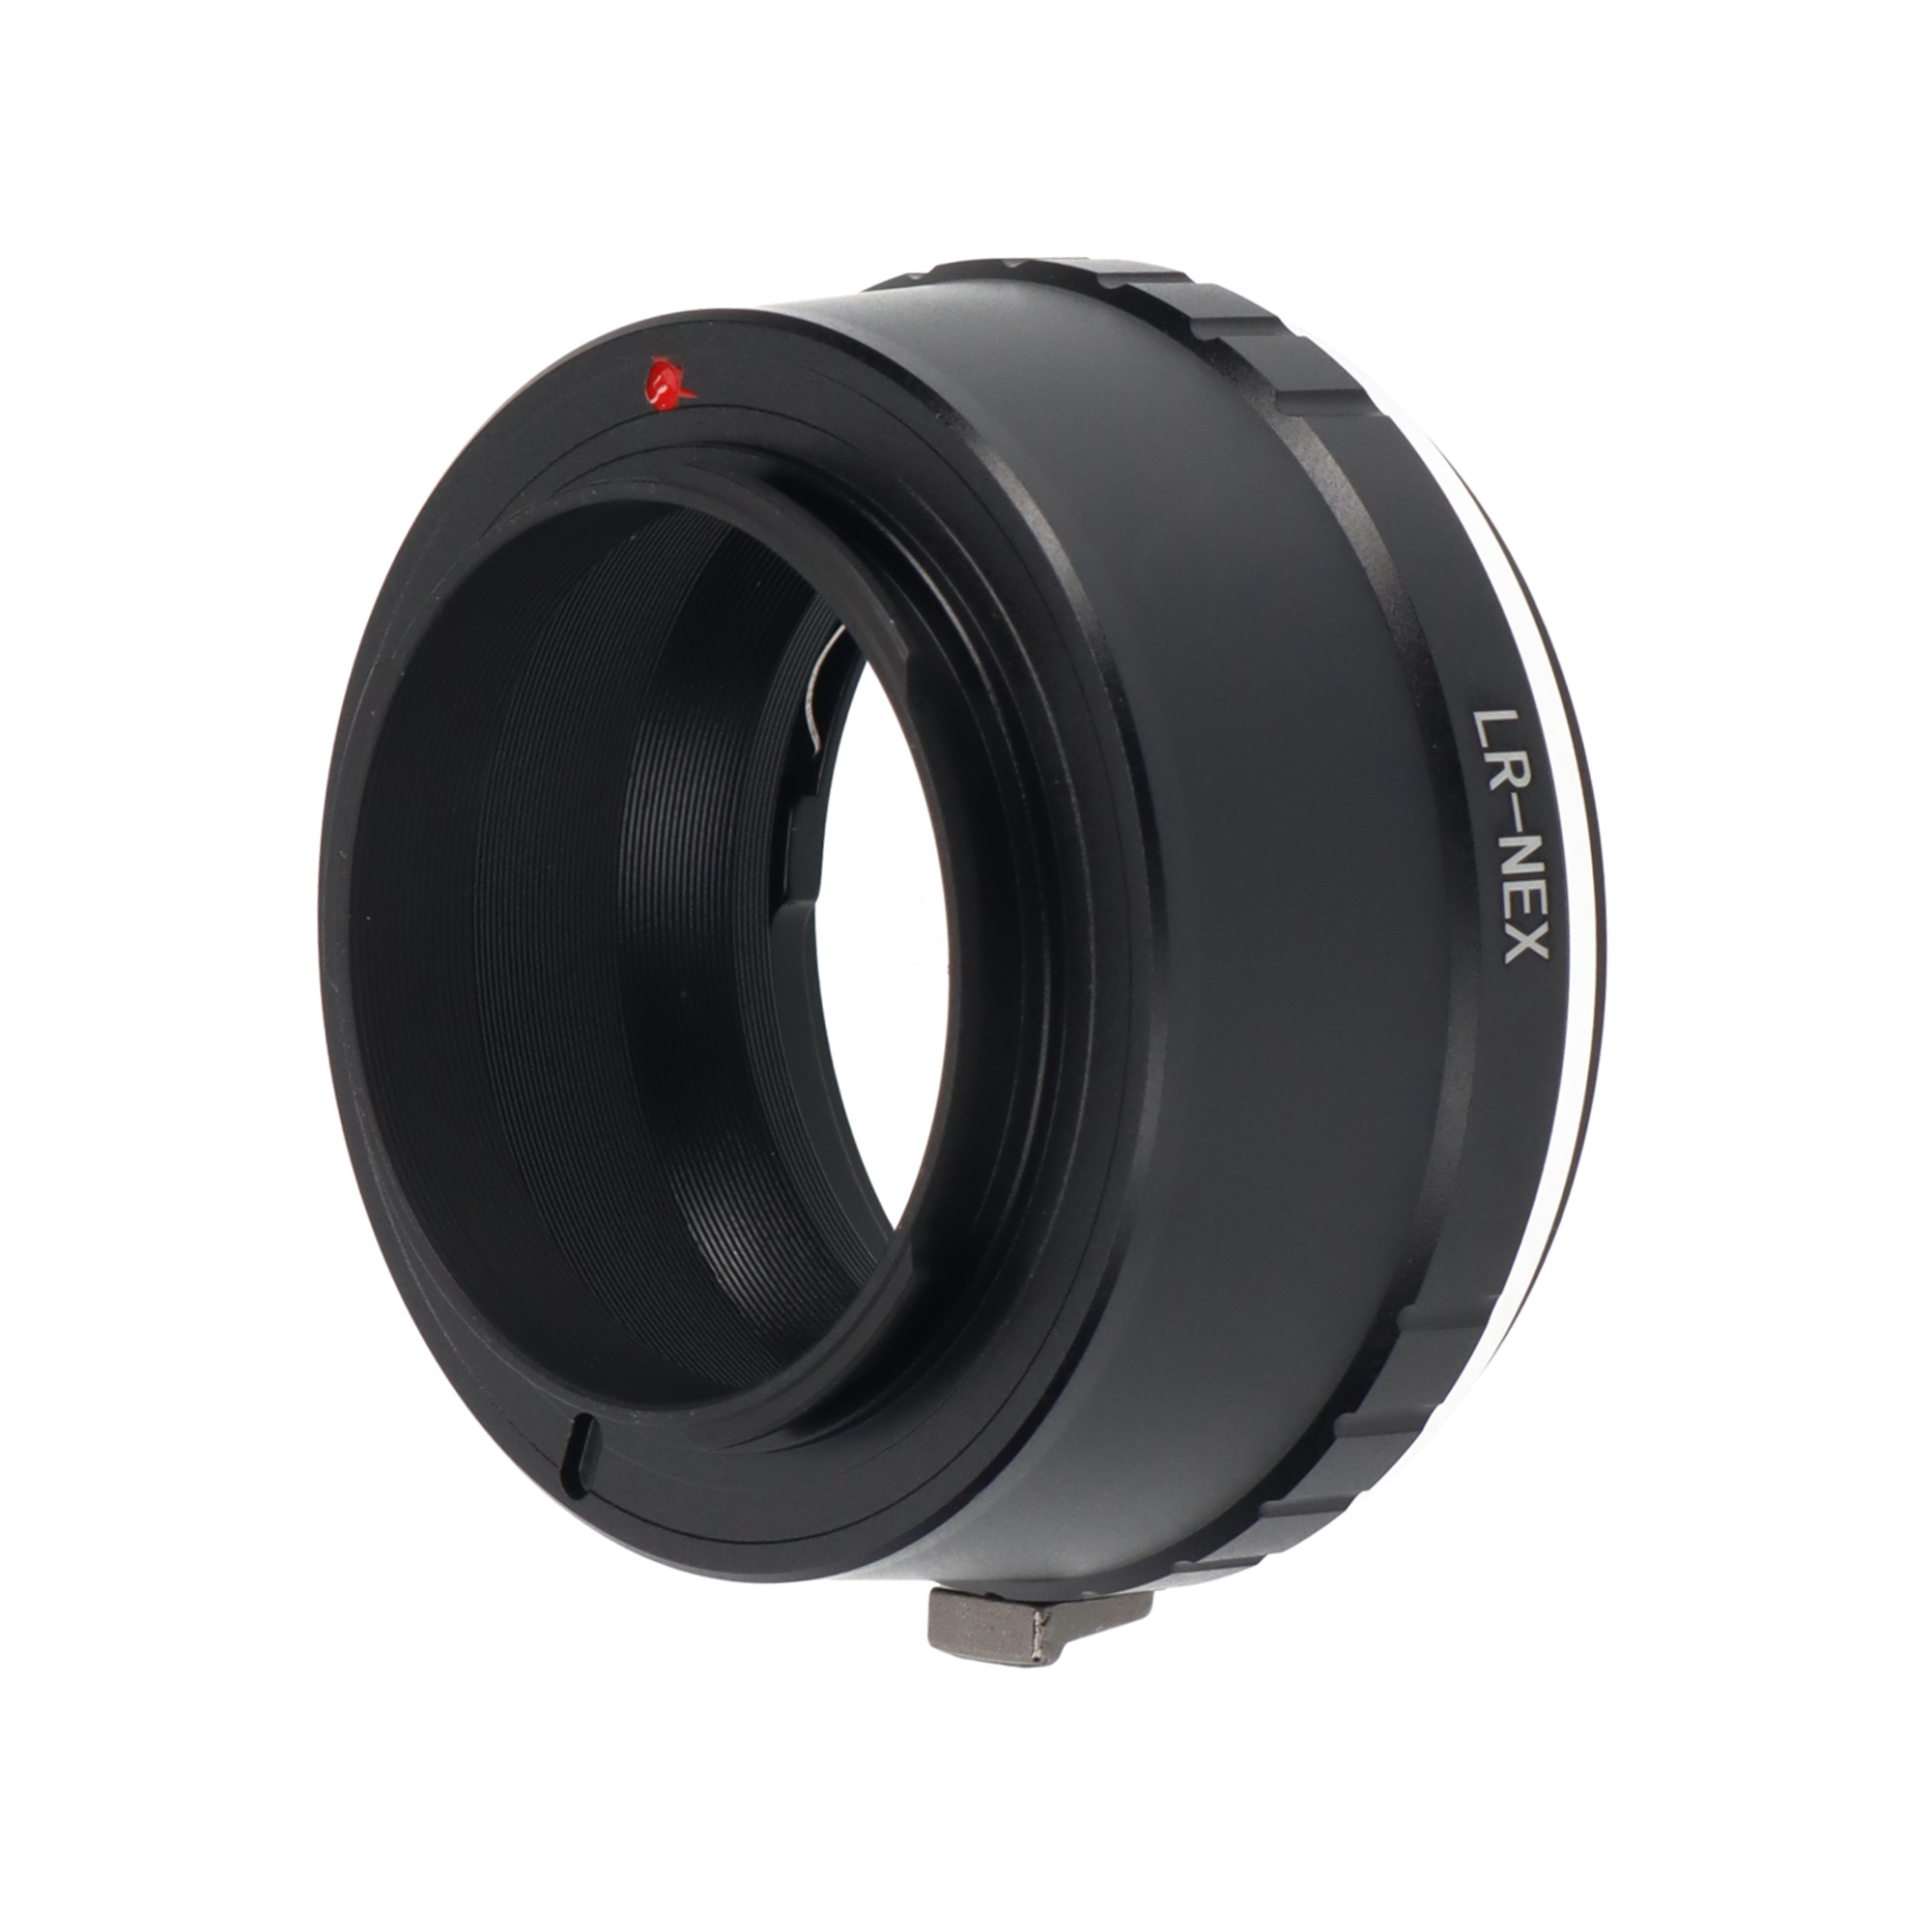 Adapter für Leica R Objektive an Sony E-Mount Kameras